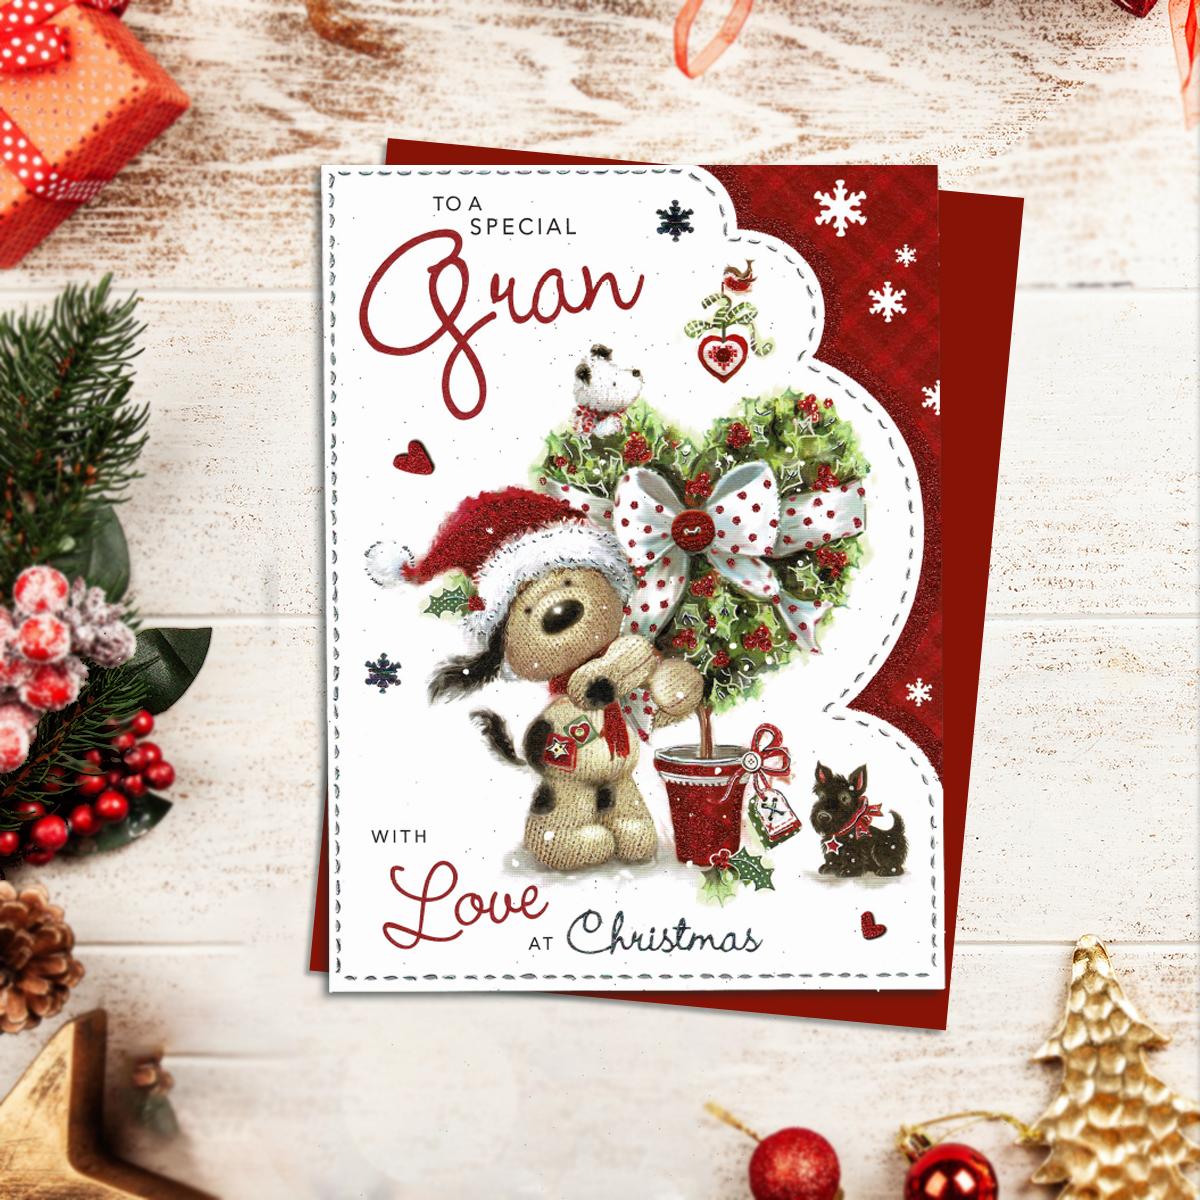 Gran Christmas Card Alongside Its Red Envelope